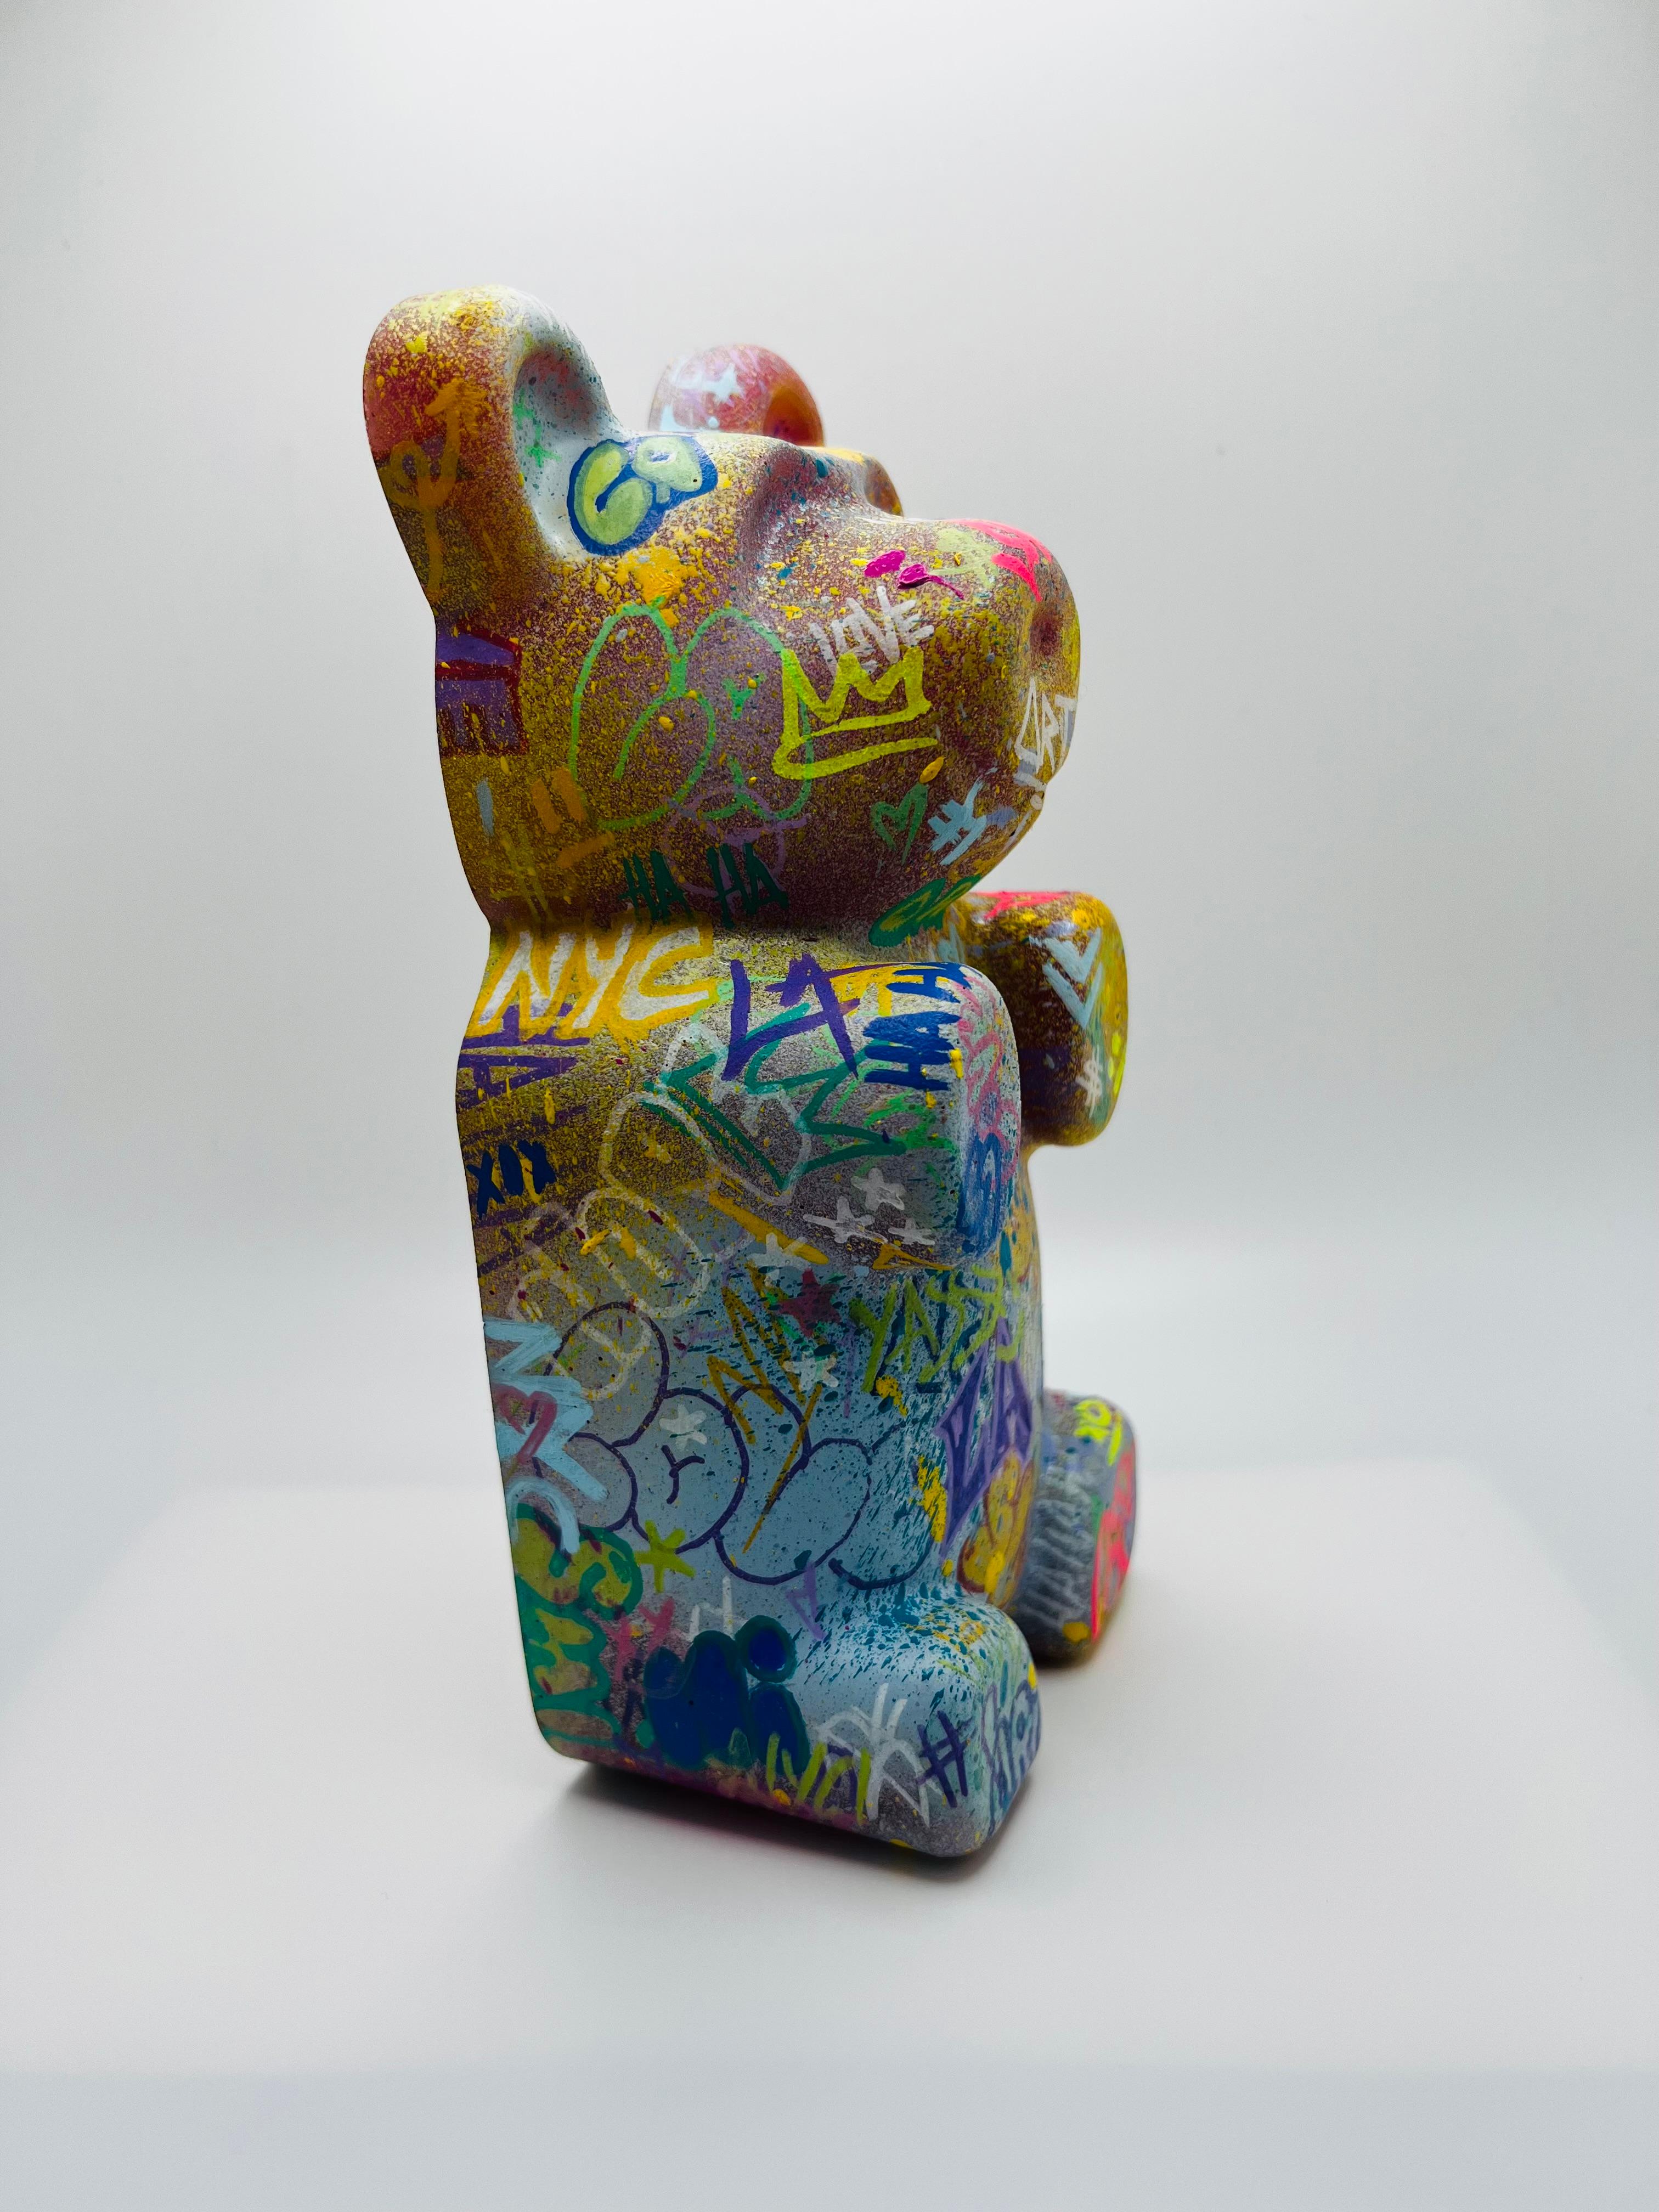 Graffiti Gummy bear 2, street art, pop art, colorful, contemporary, sculpture - Contemporary Mixed Media Art by Sahara Novotny